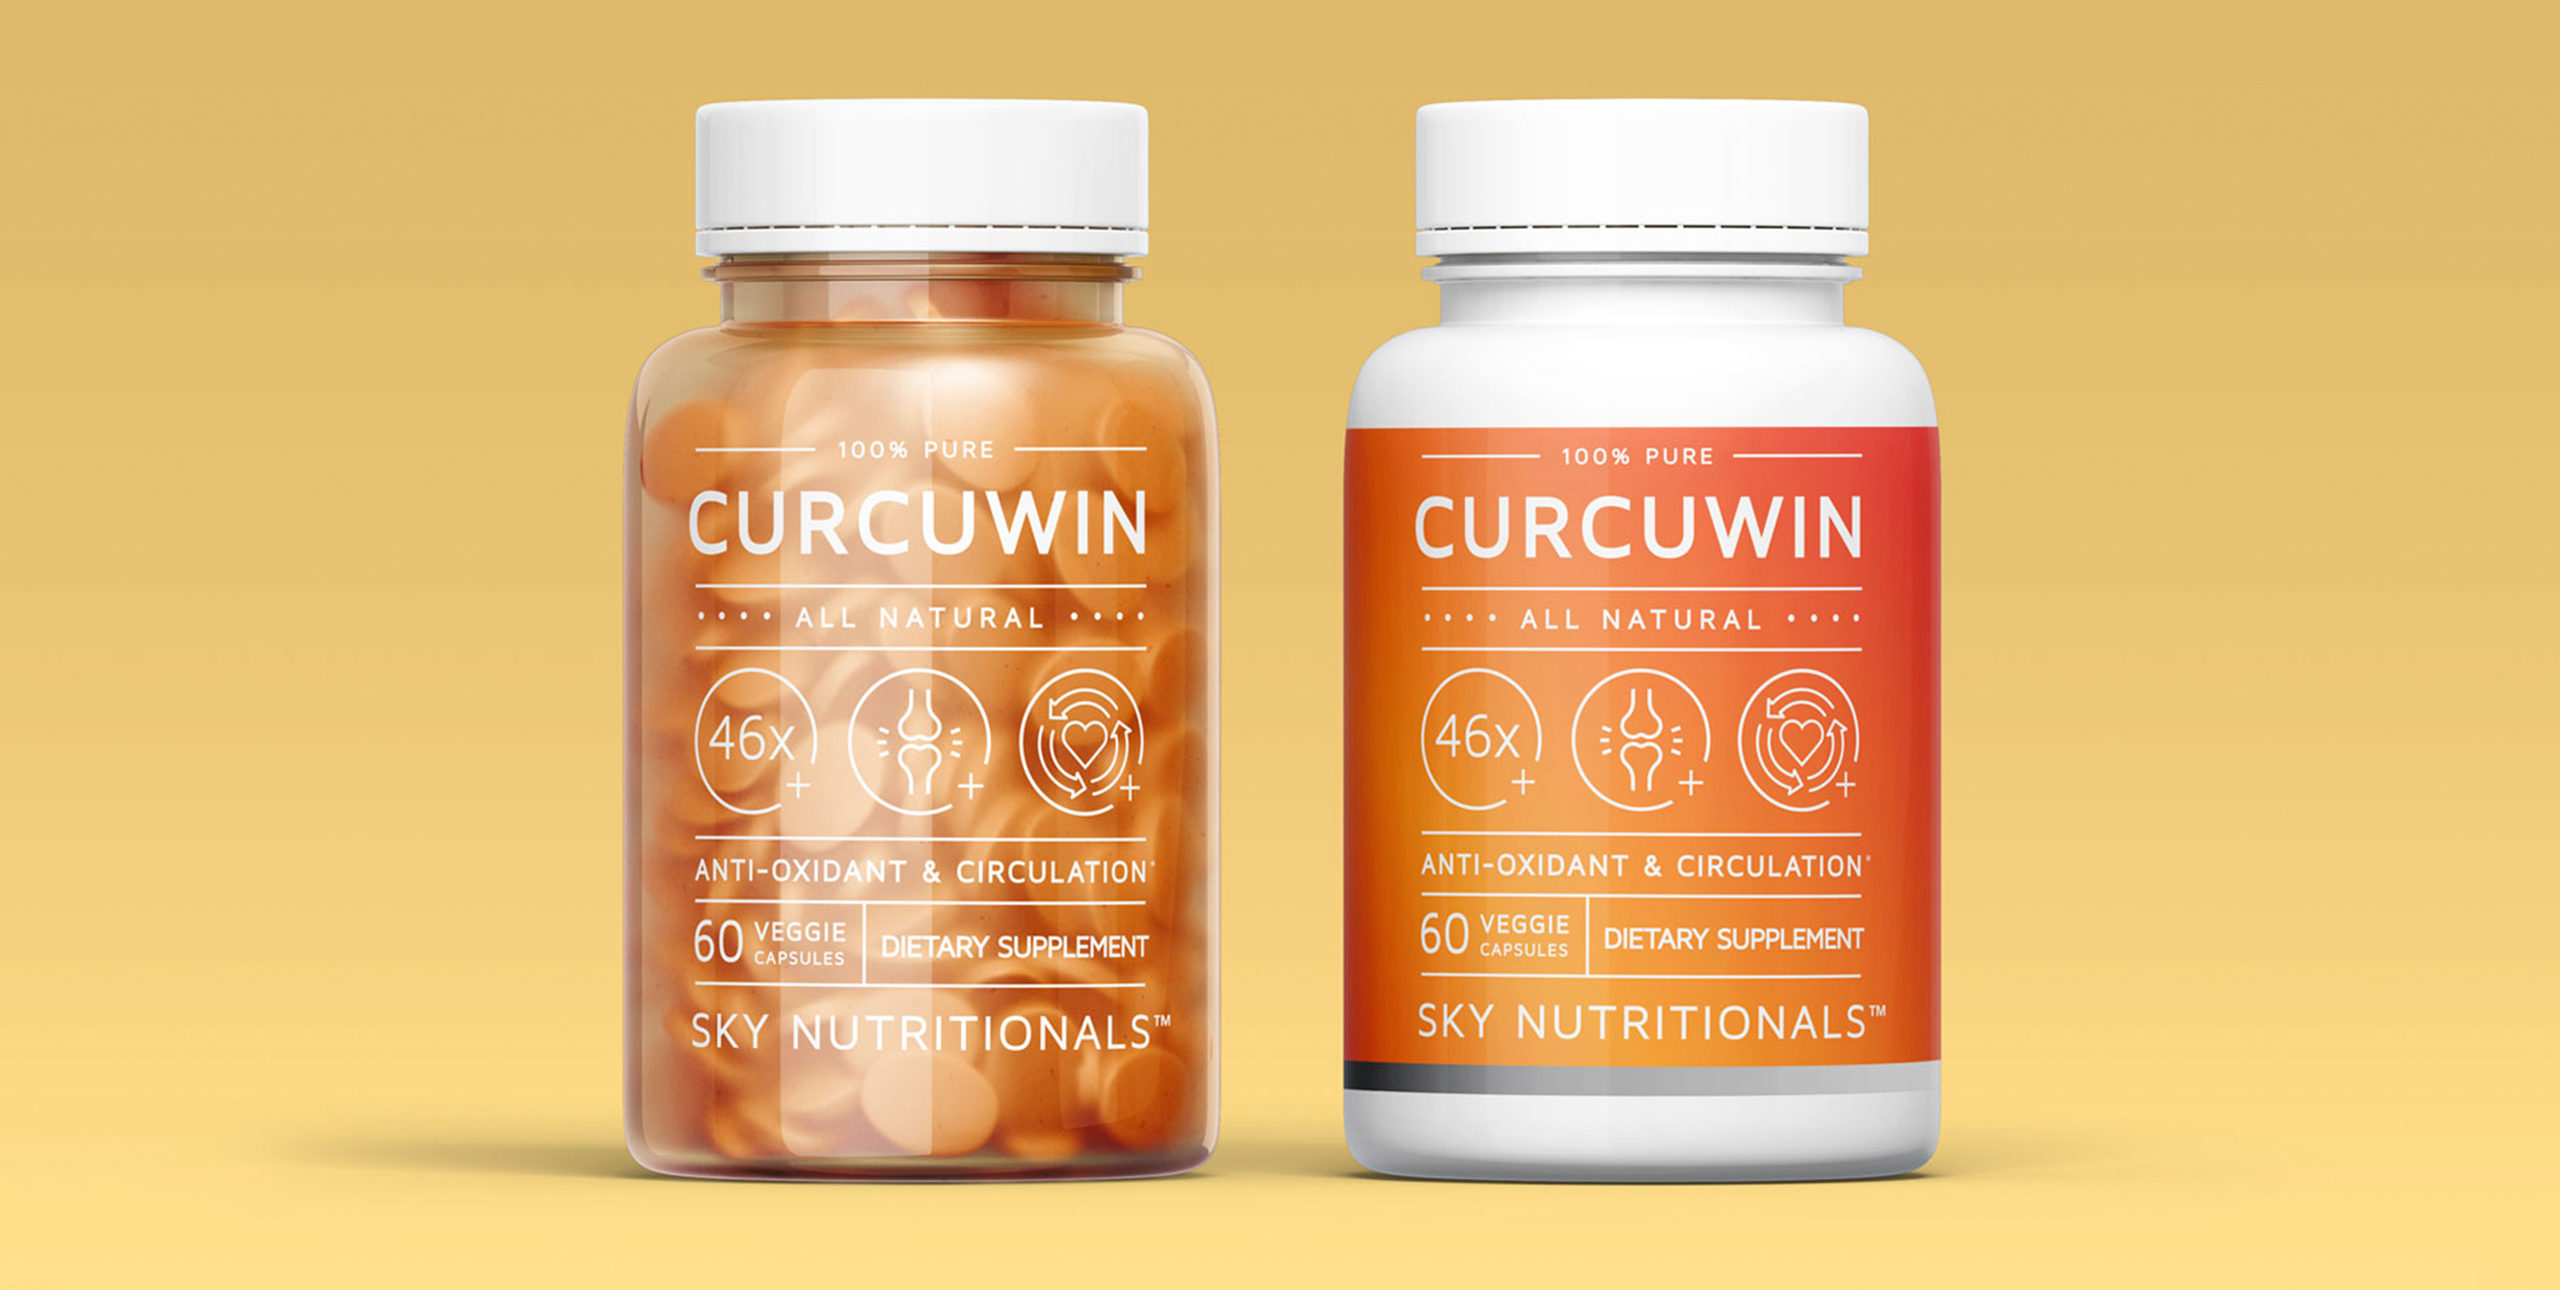 Sky Nutritionals curcuwin bottle packaging design 